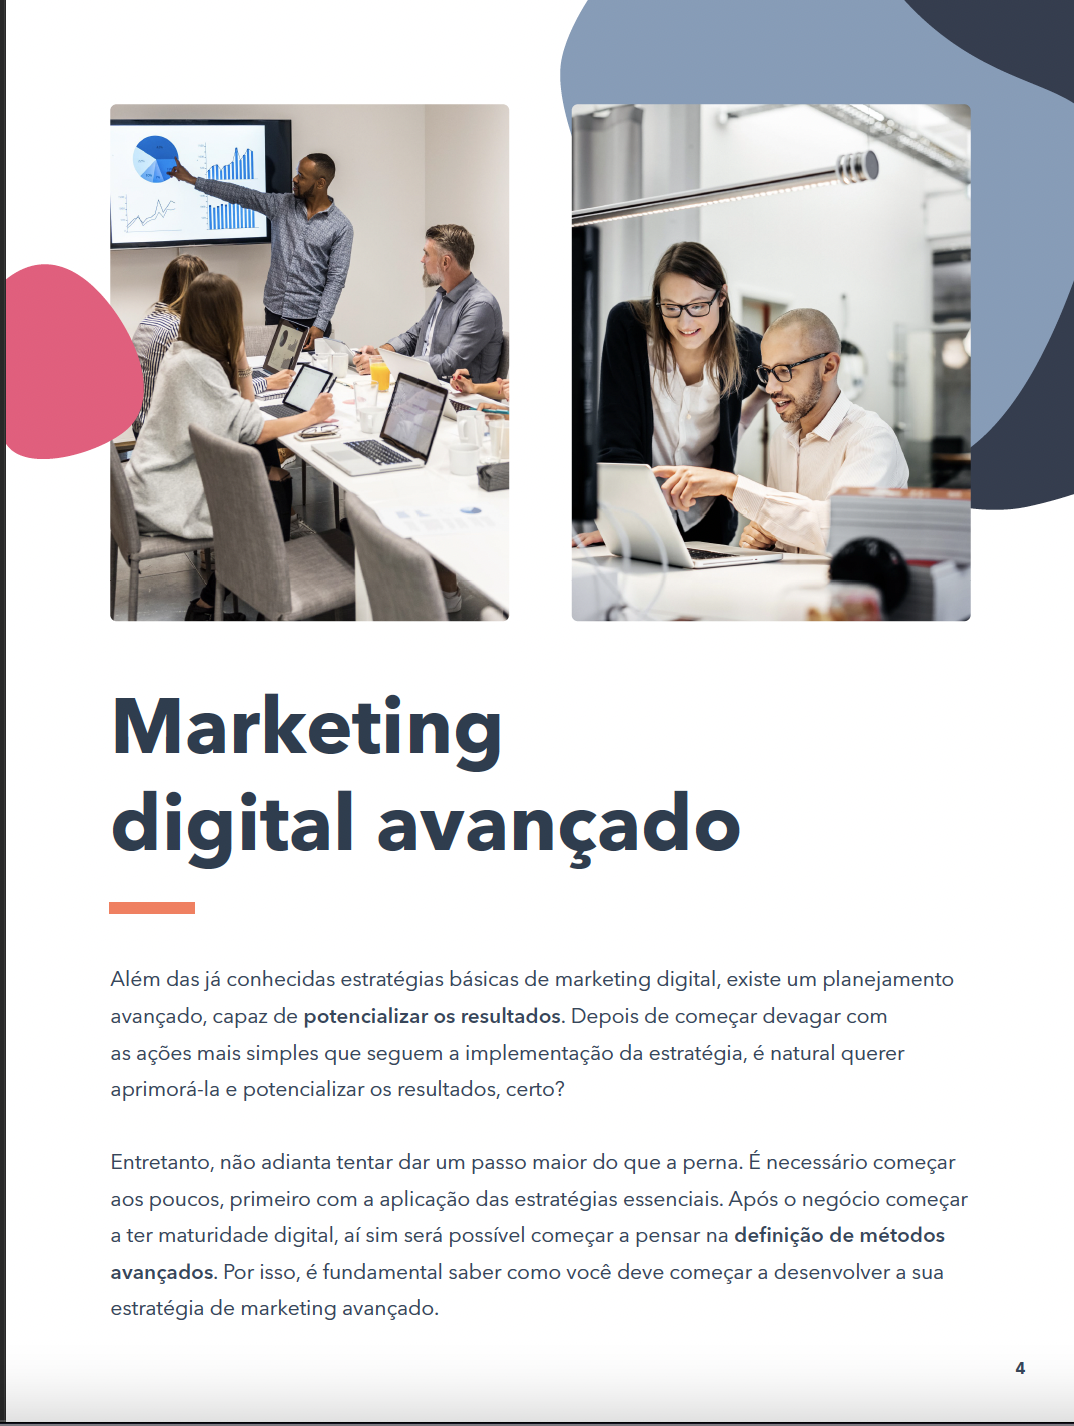 Digital-Marketing-Avancado1